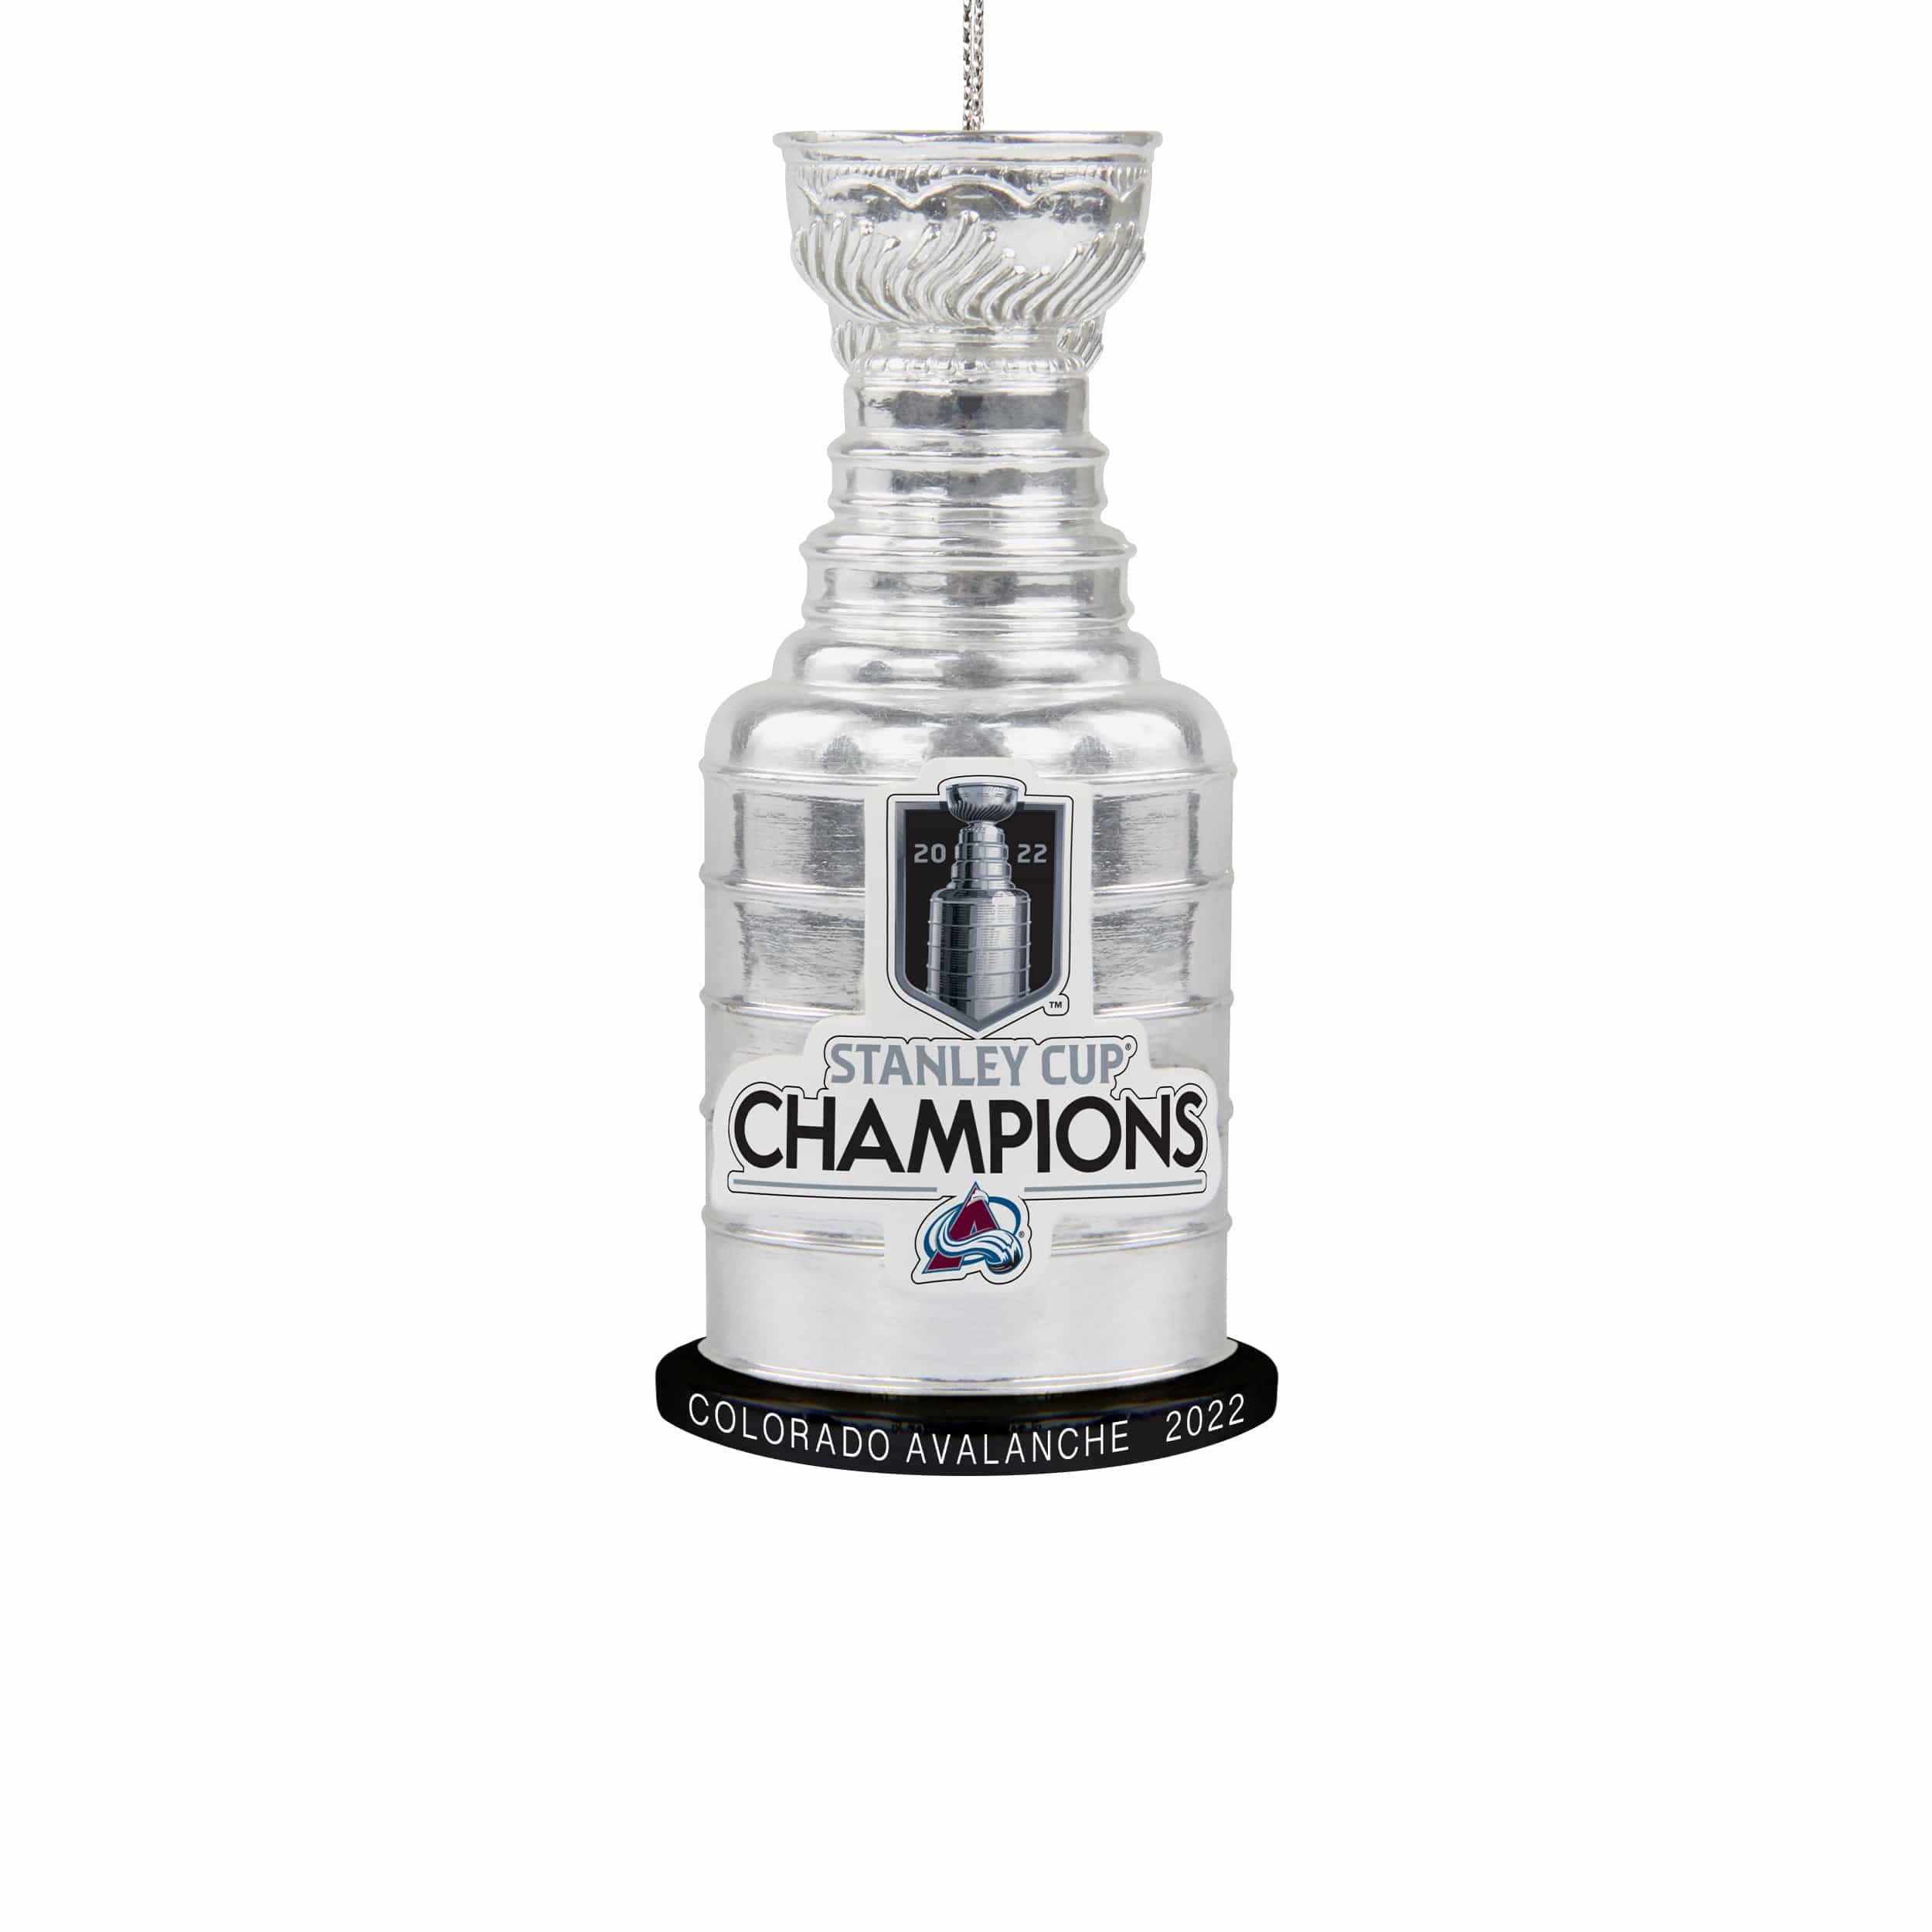 2022 COLORADO AVALANCHE, 2022 Stanley Cup Champions - Hallmark Ornament -  Hooked on Hallmark Ornaments